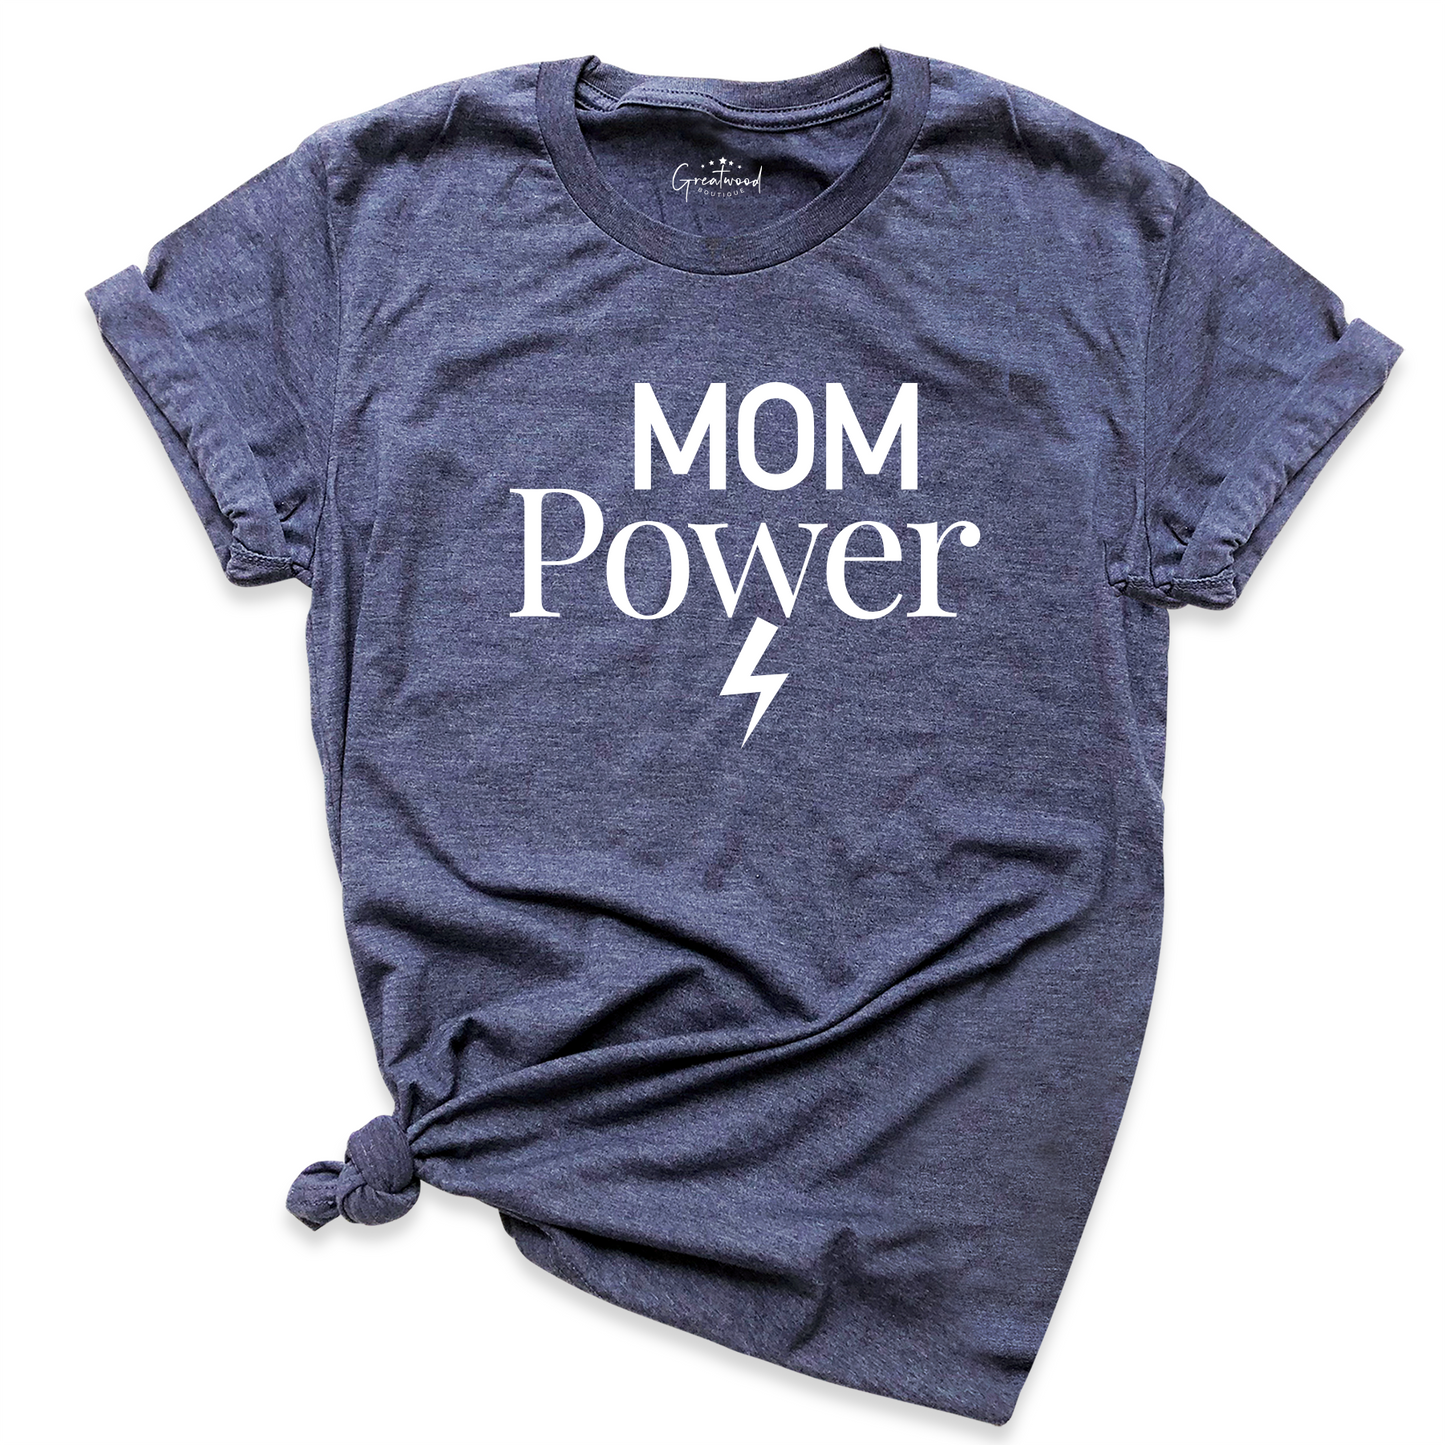 Mom Power Shirt